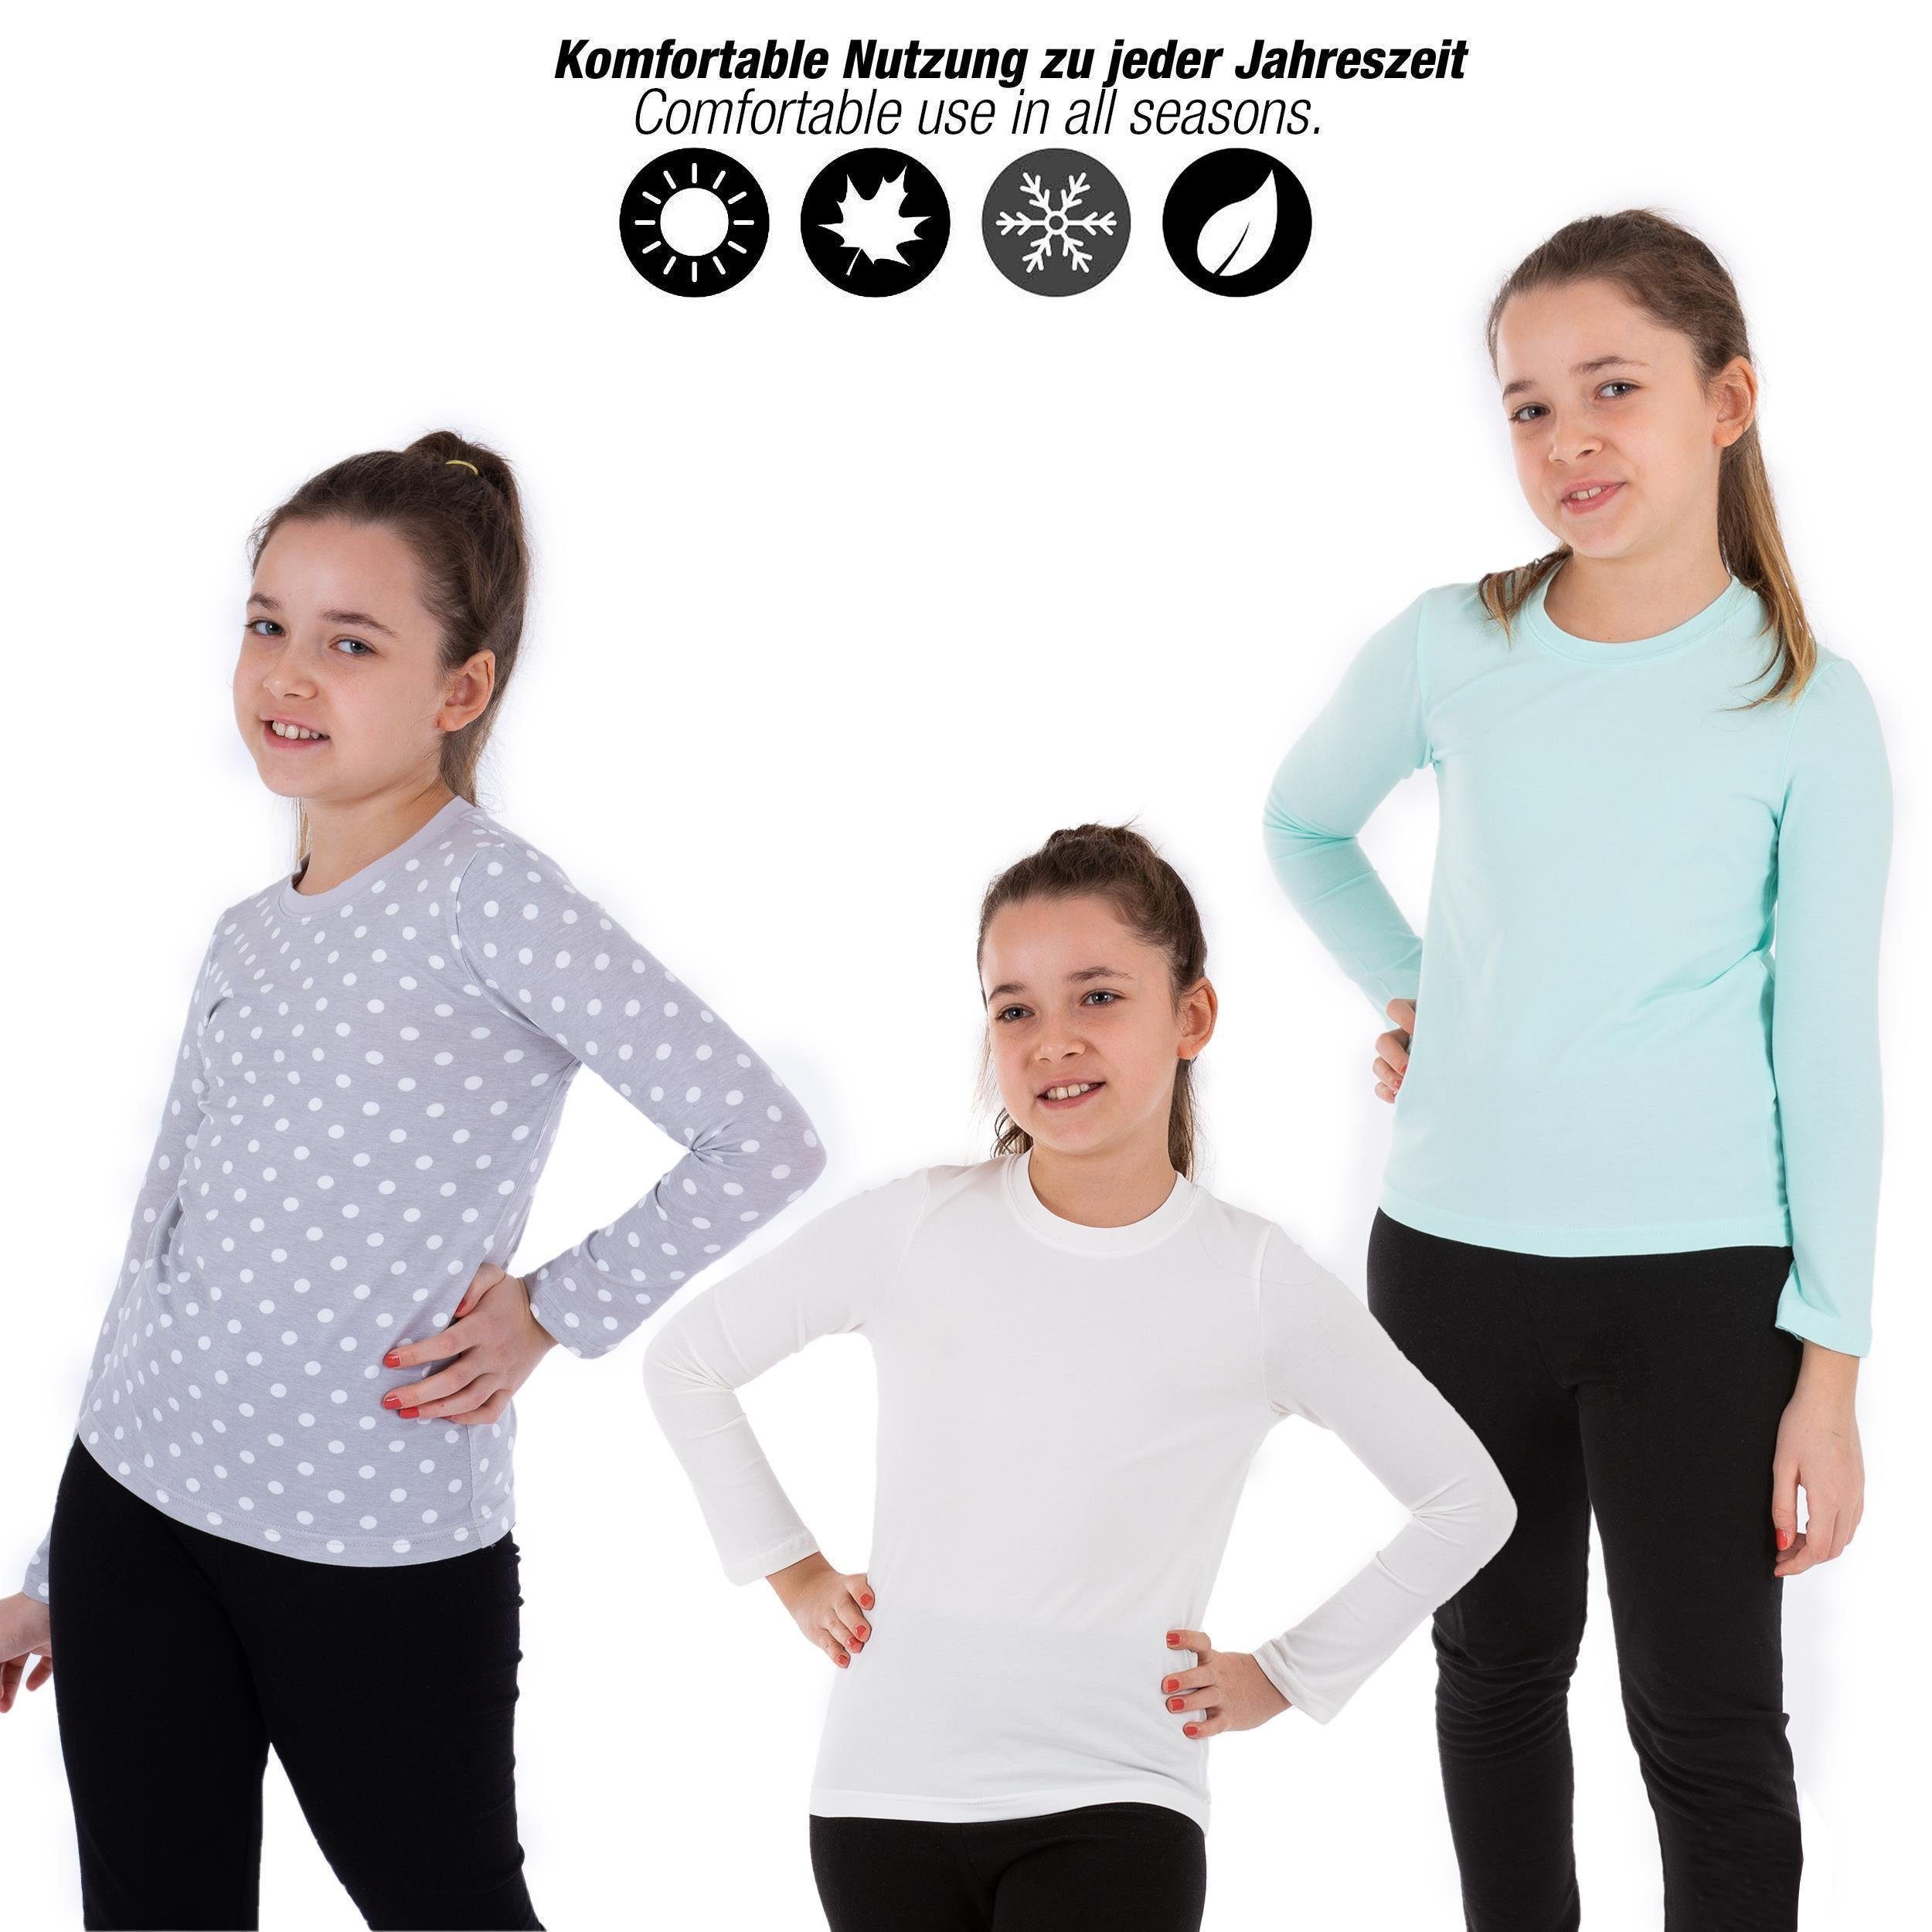 (Set, Unterhemd 3-St) Kinder 2 Pack LOREZA Variante Unterhemden Mädchen Body Shirt Langarmshirts 3er